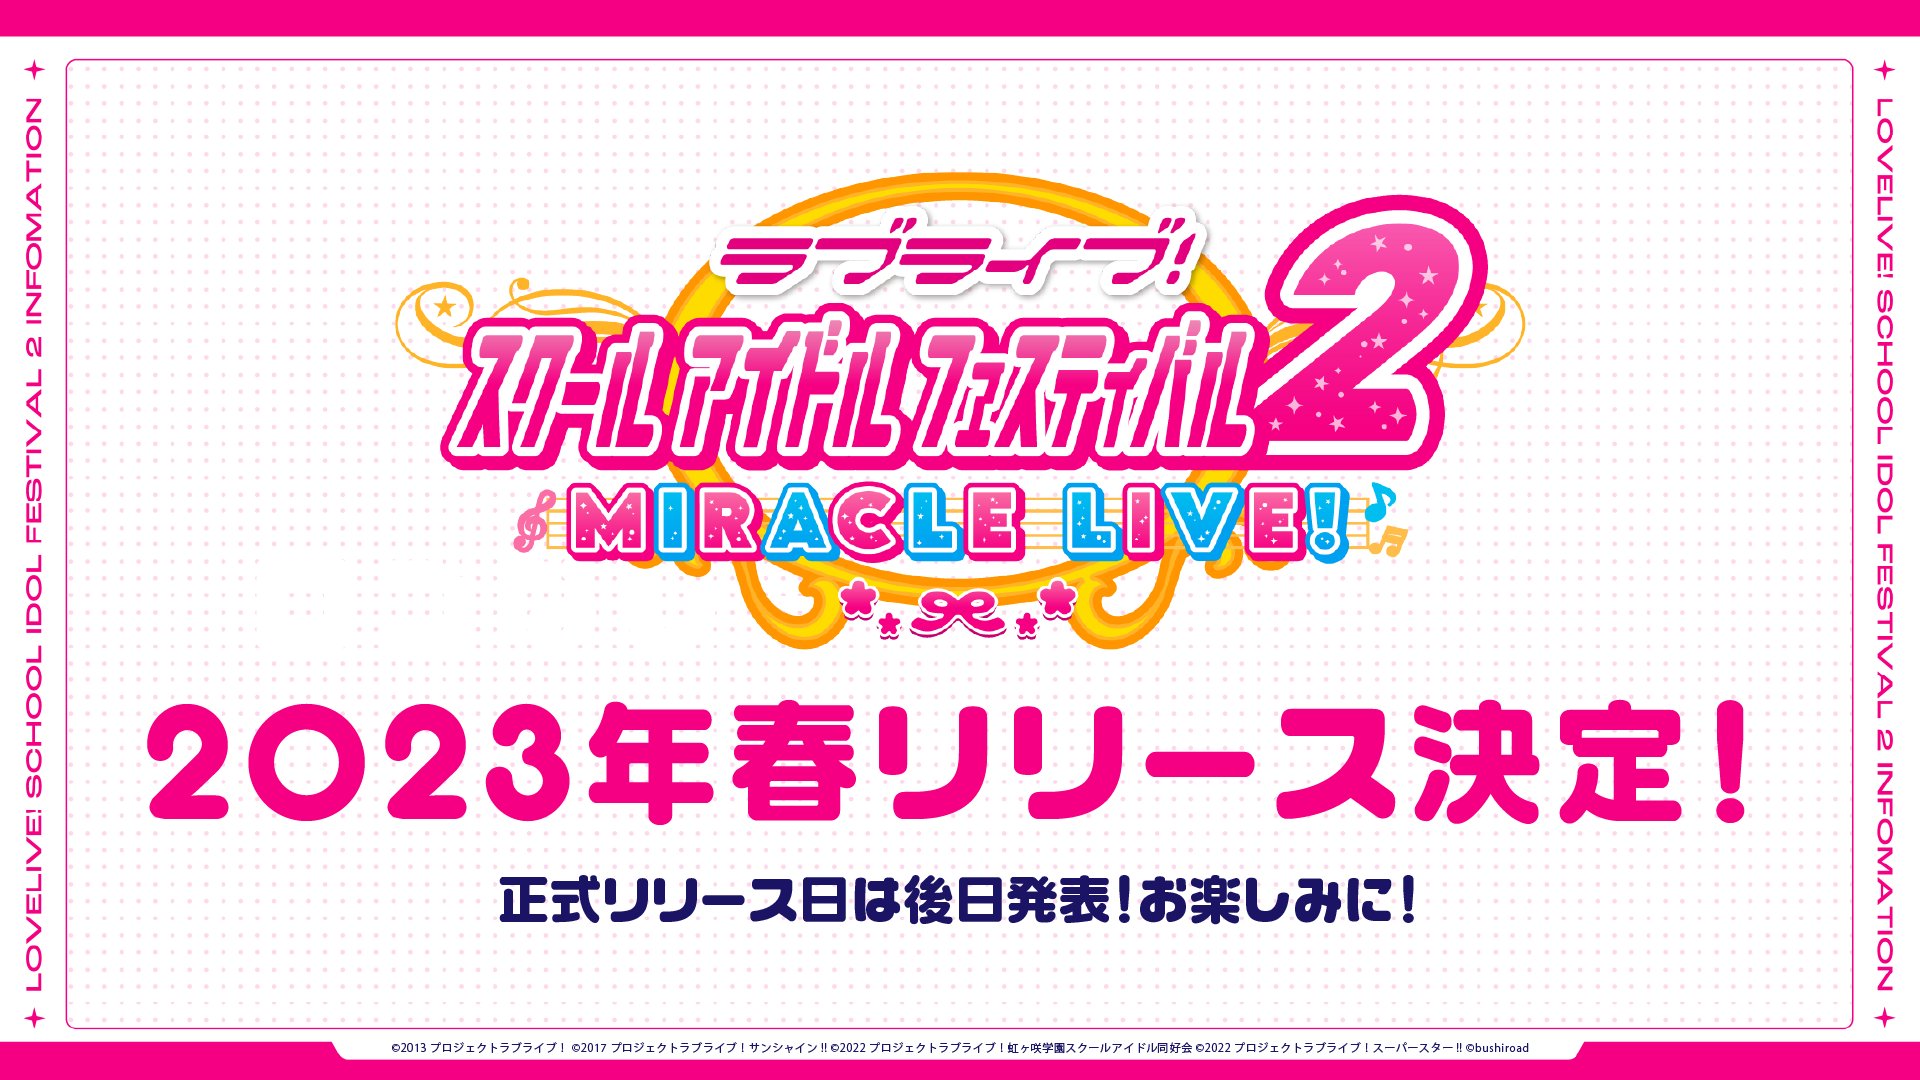 Love Live! School Idol Festival 2 Miracle Live! header